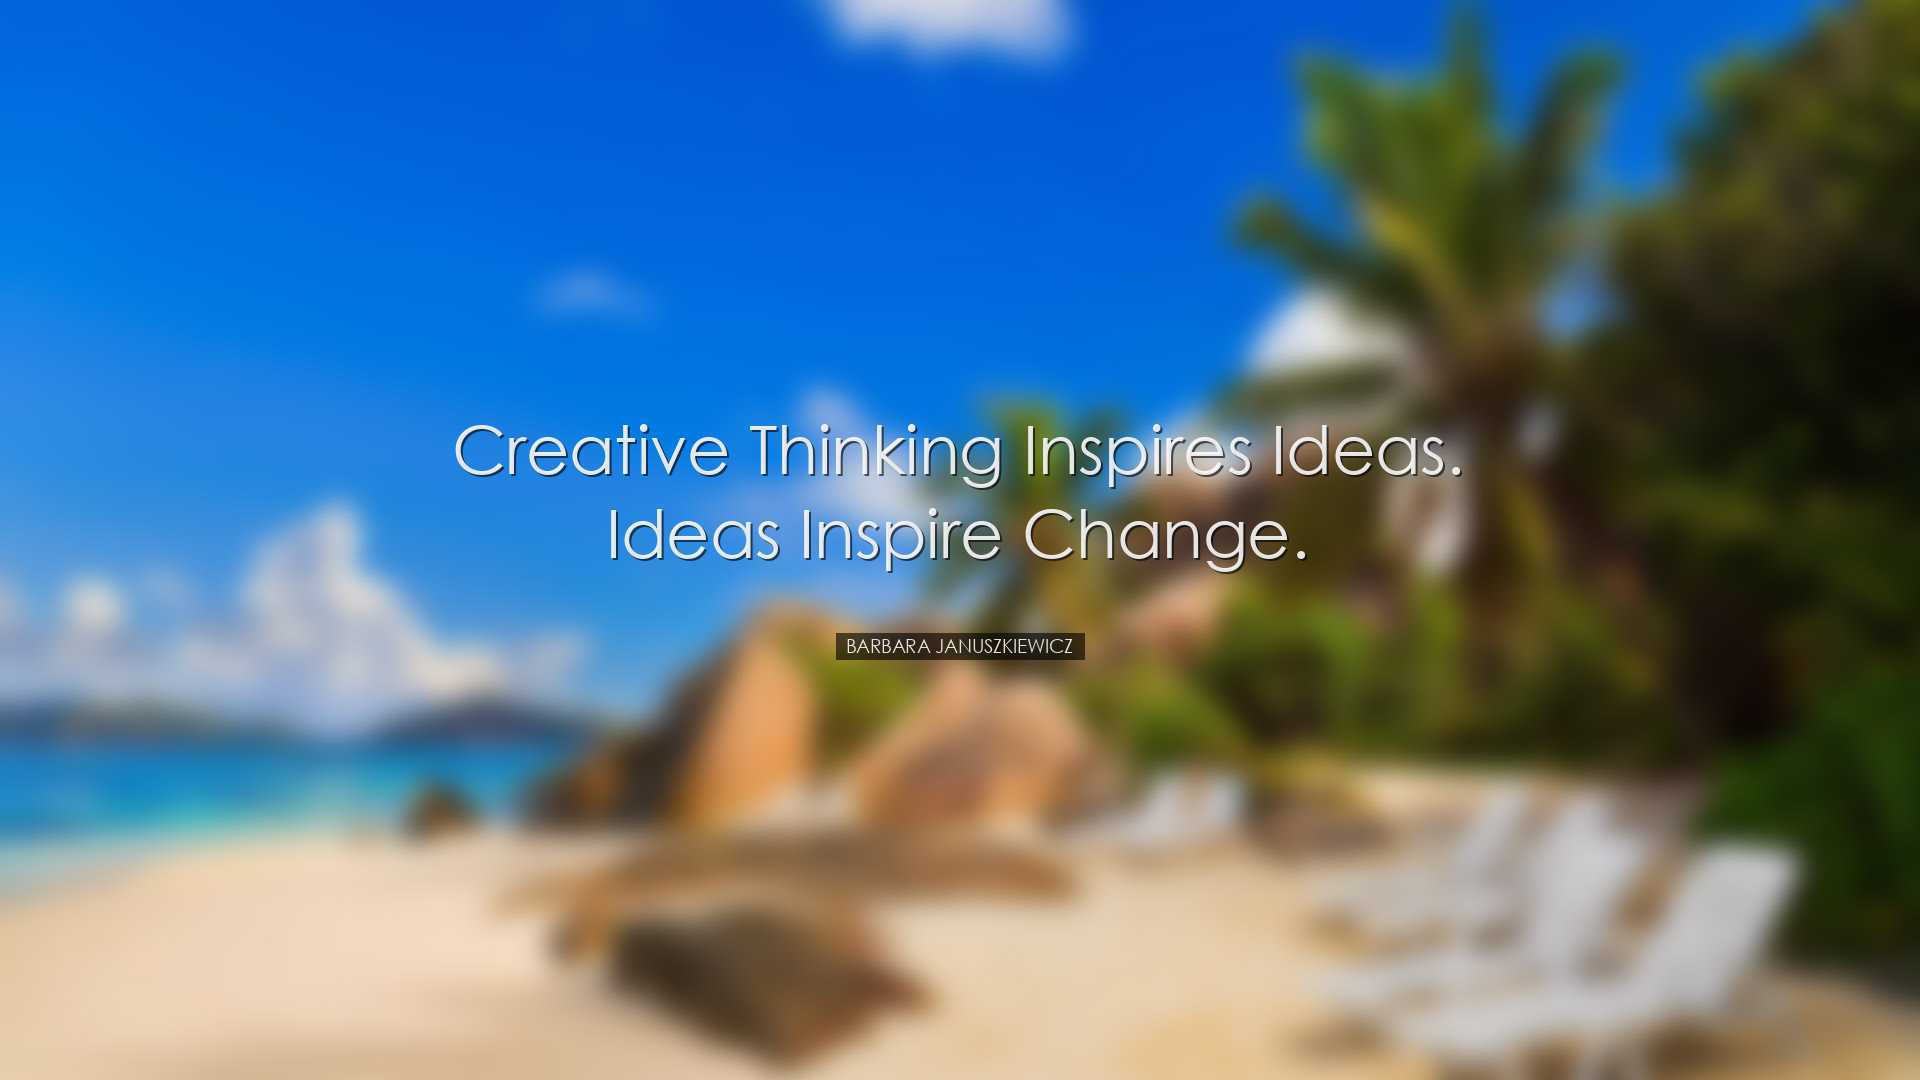 Creative thinking inspires ideas. Ideas inspire change. - Barbara